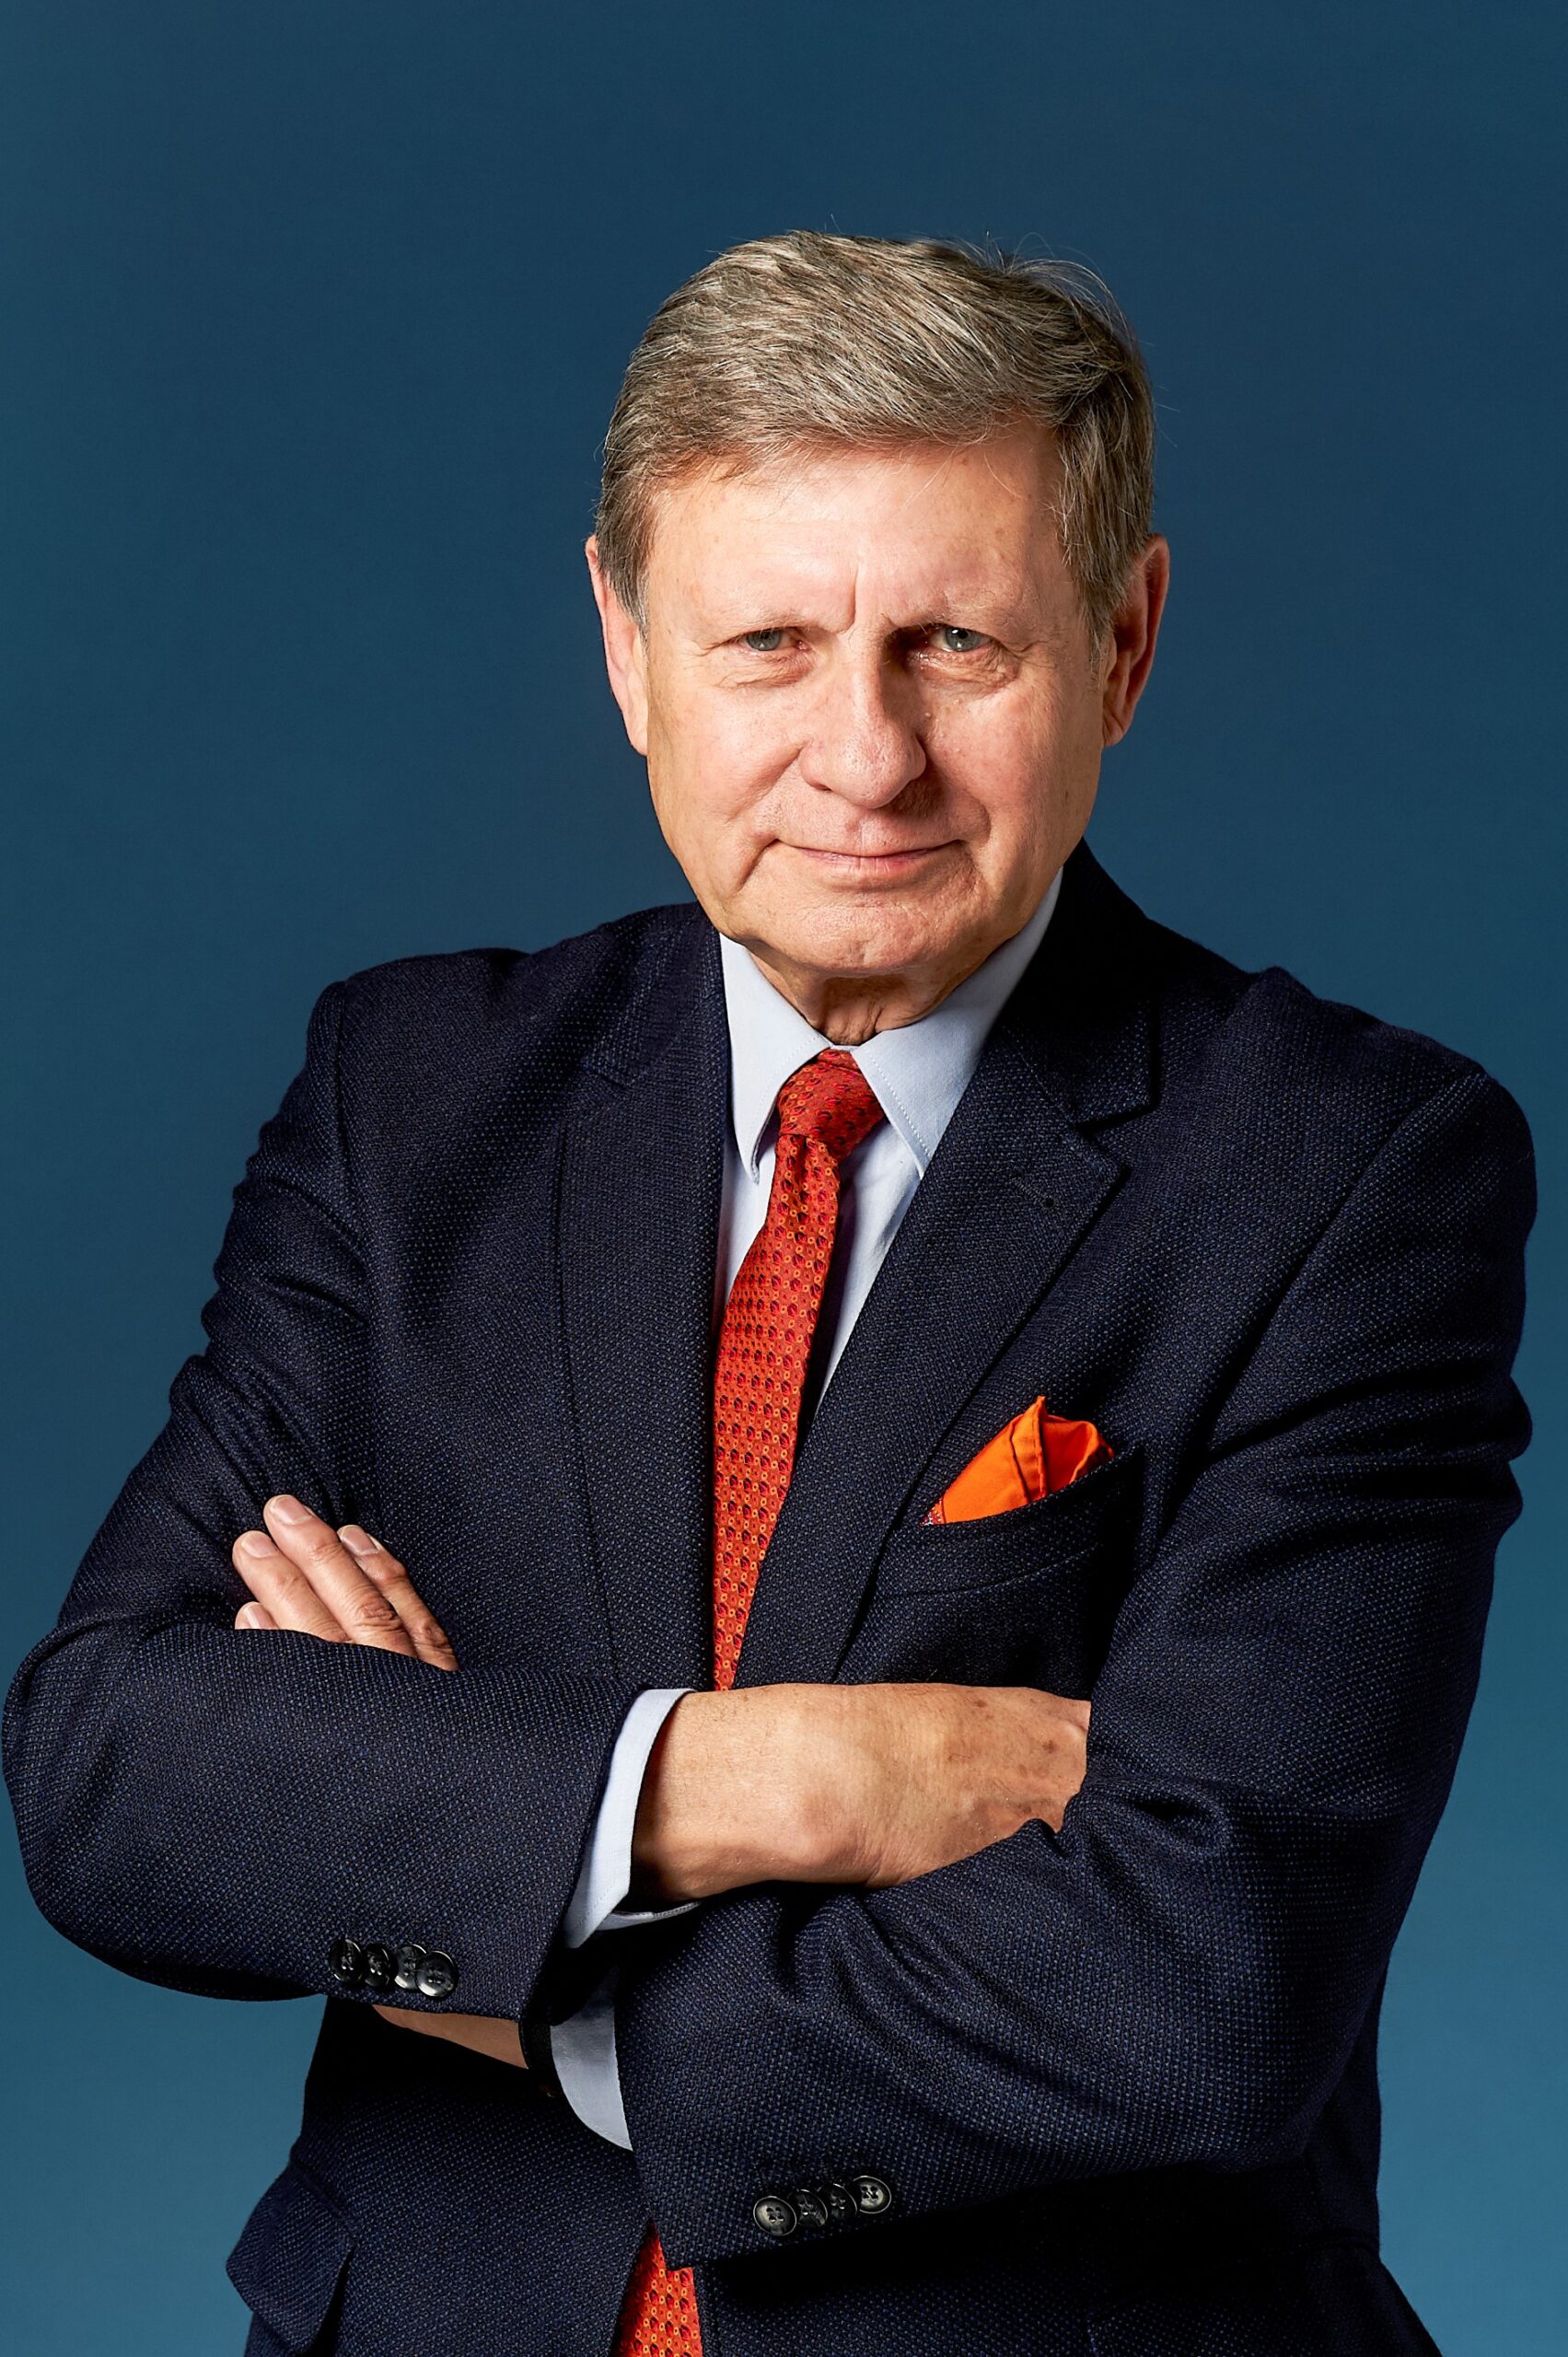 prof. Leszek Balcerowicz